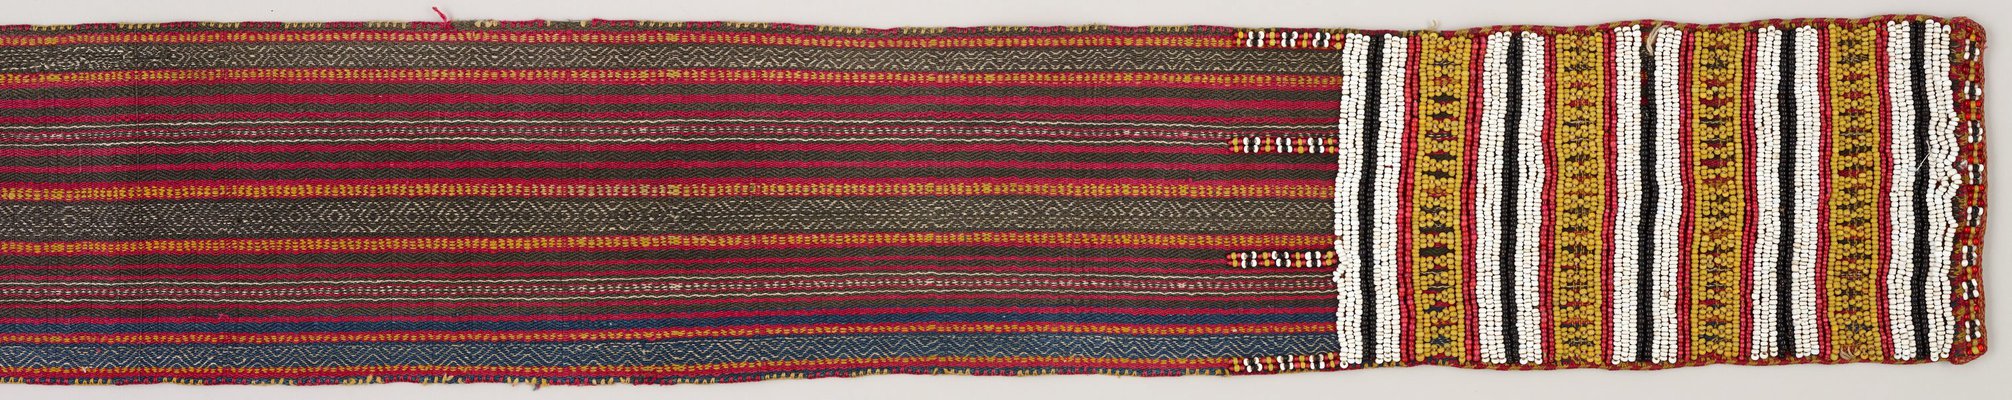 Alternate image of Loin cloth by Ga'dang